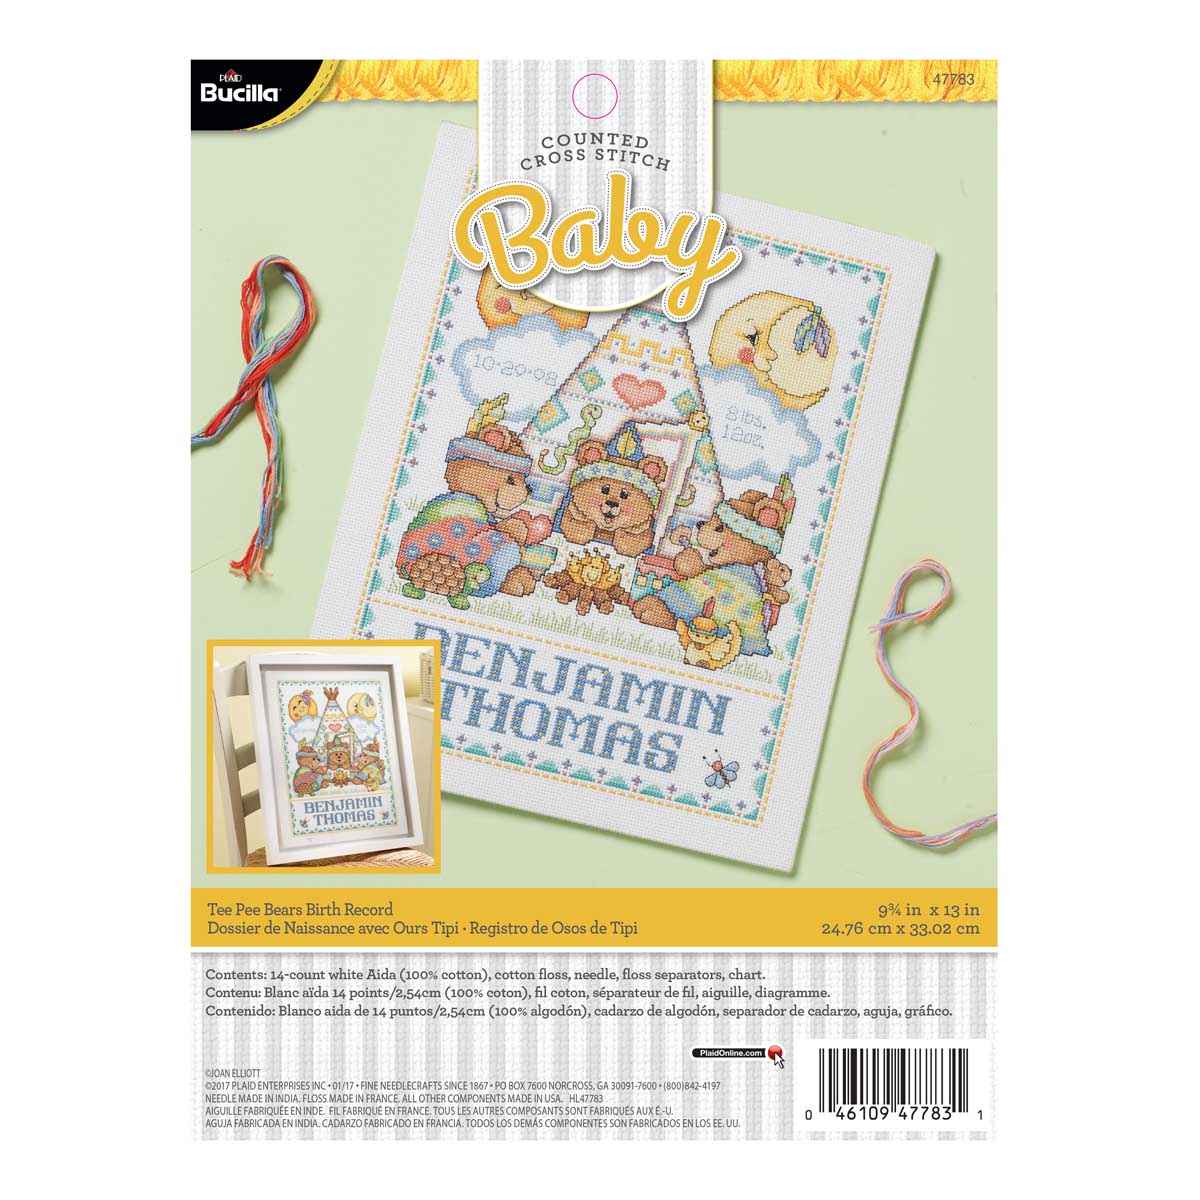 Bucilla ® Baby - Counted Cross Stitch - Crib Ensembles - Tee Pee Bears - Birth Record Kit - 47783